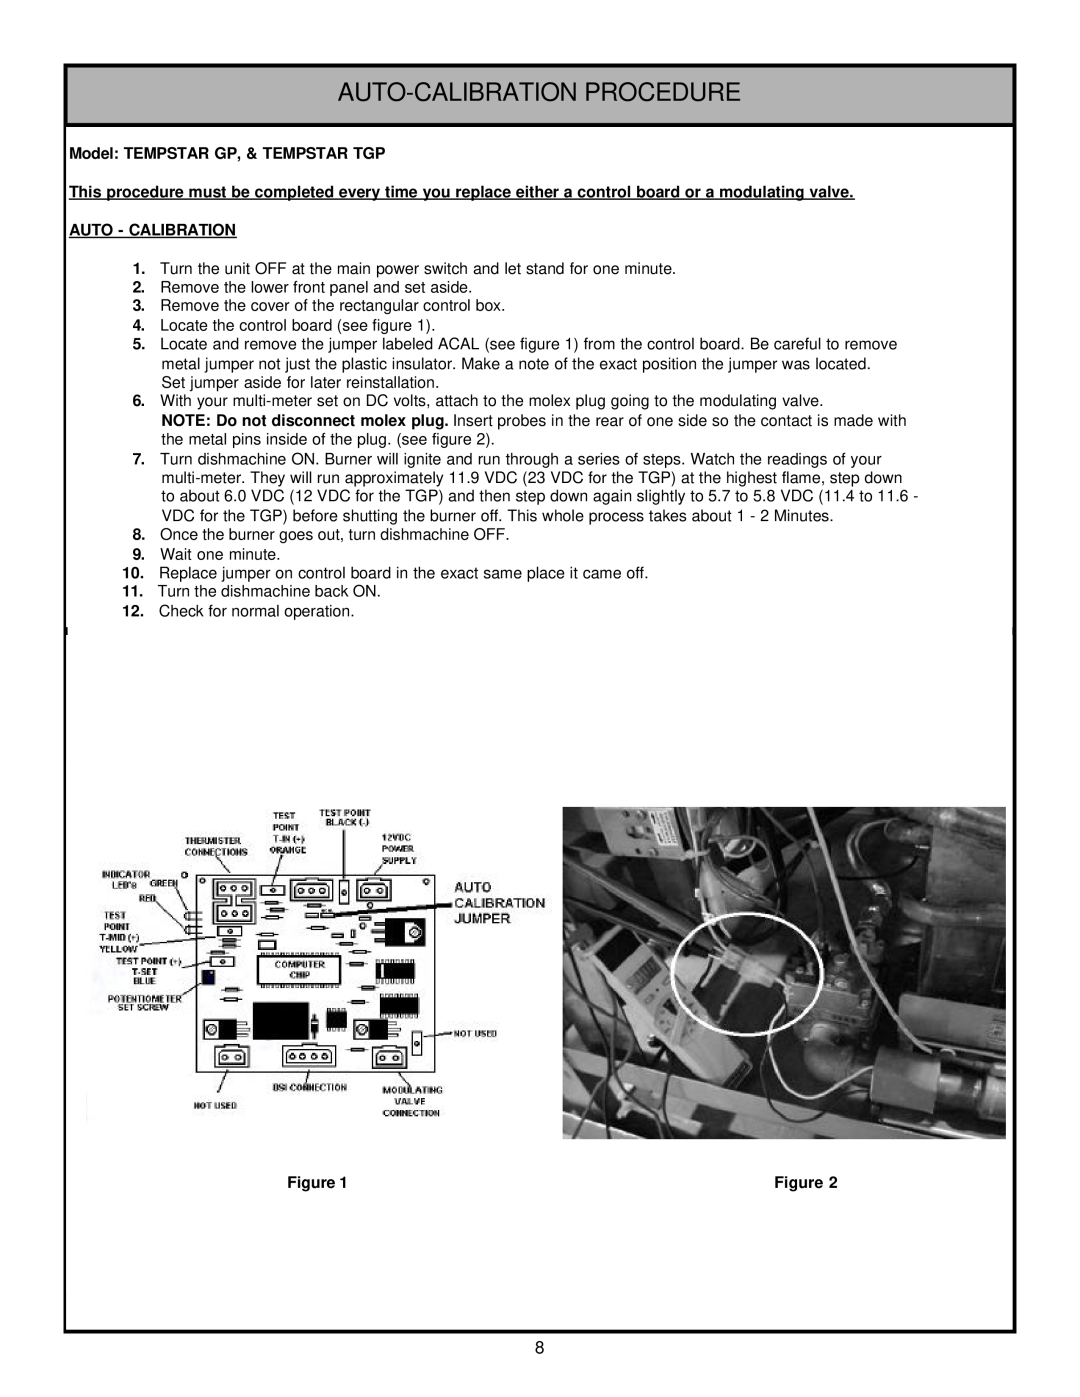 Jackson Tempstar GP technical manual Auto-Calibration Procedure, Model TEMPSTAR GP, & TEMPSTAR TGP, Auto - Calibration 